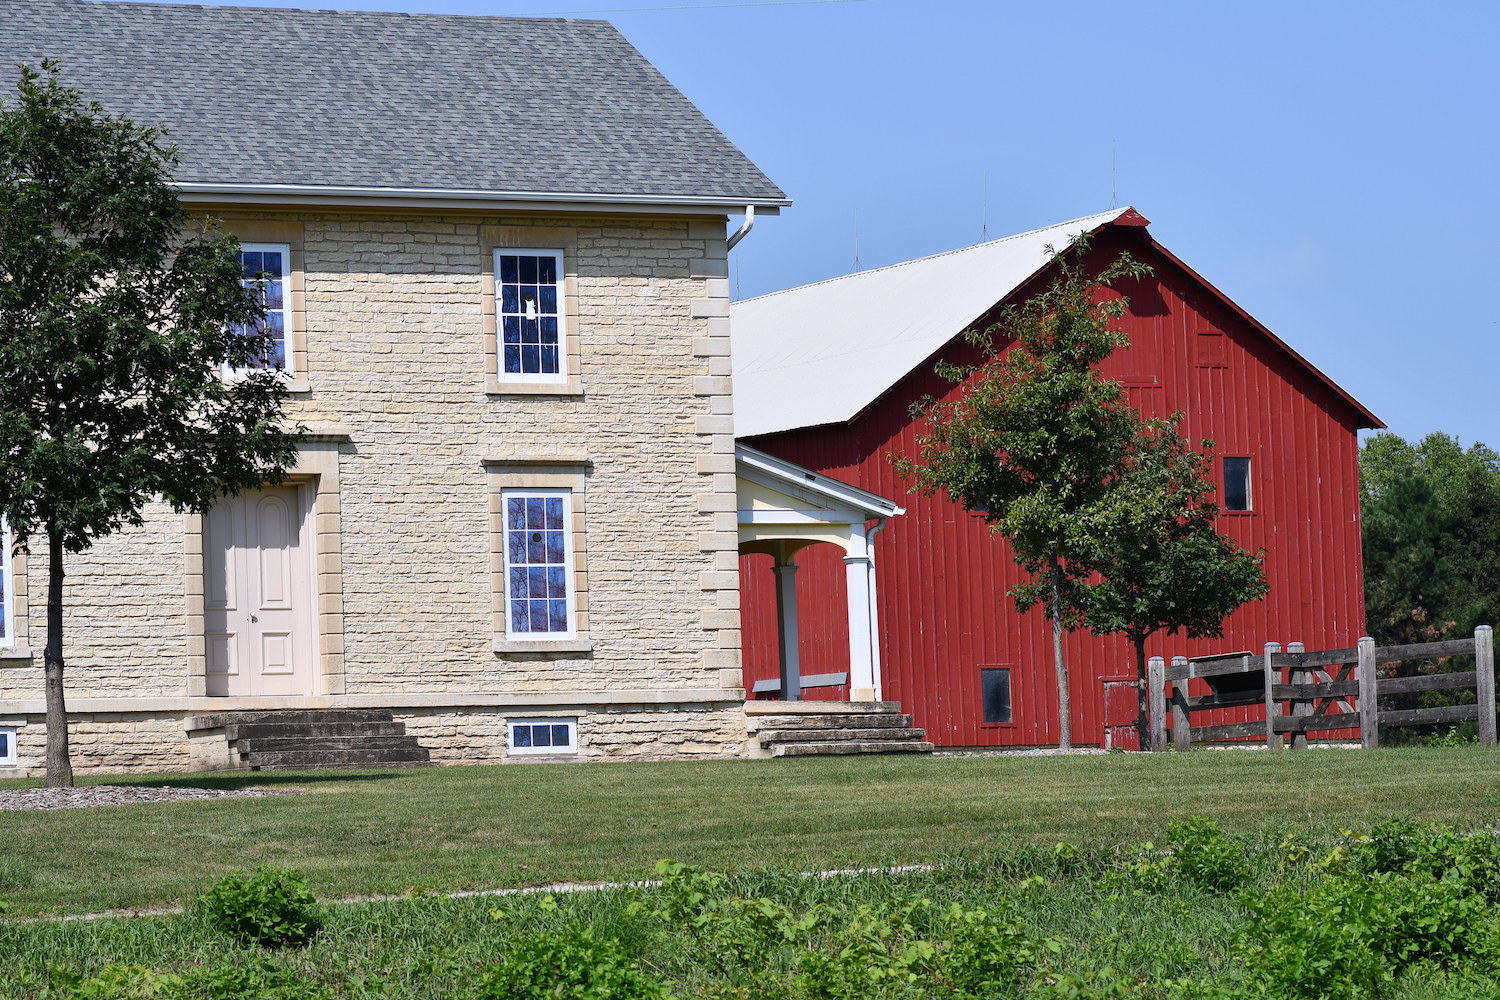 An old farmhouse and an large red barn set on a historic farmstead.